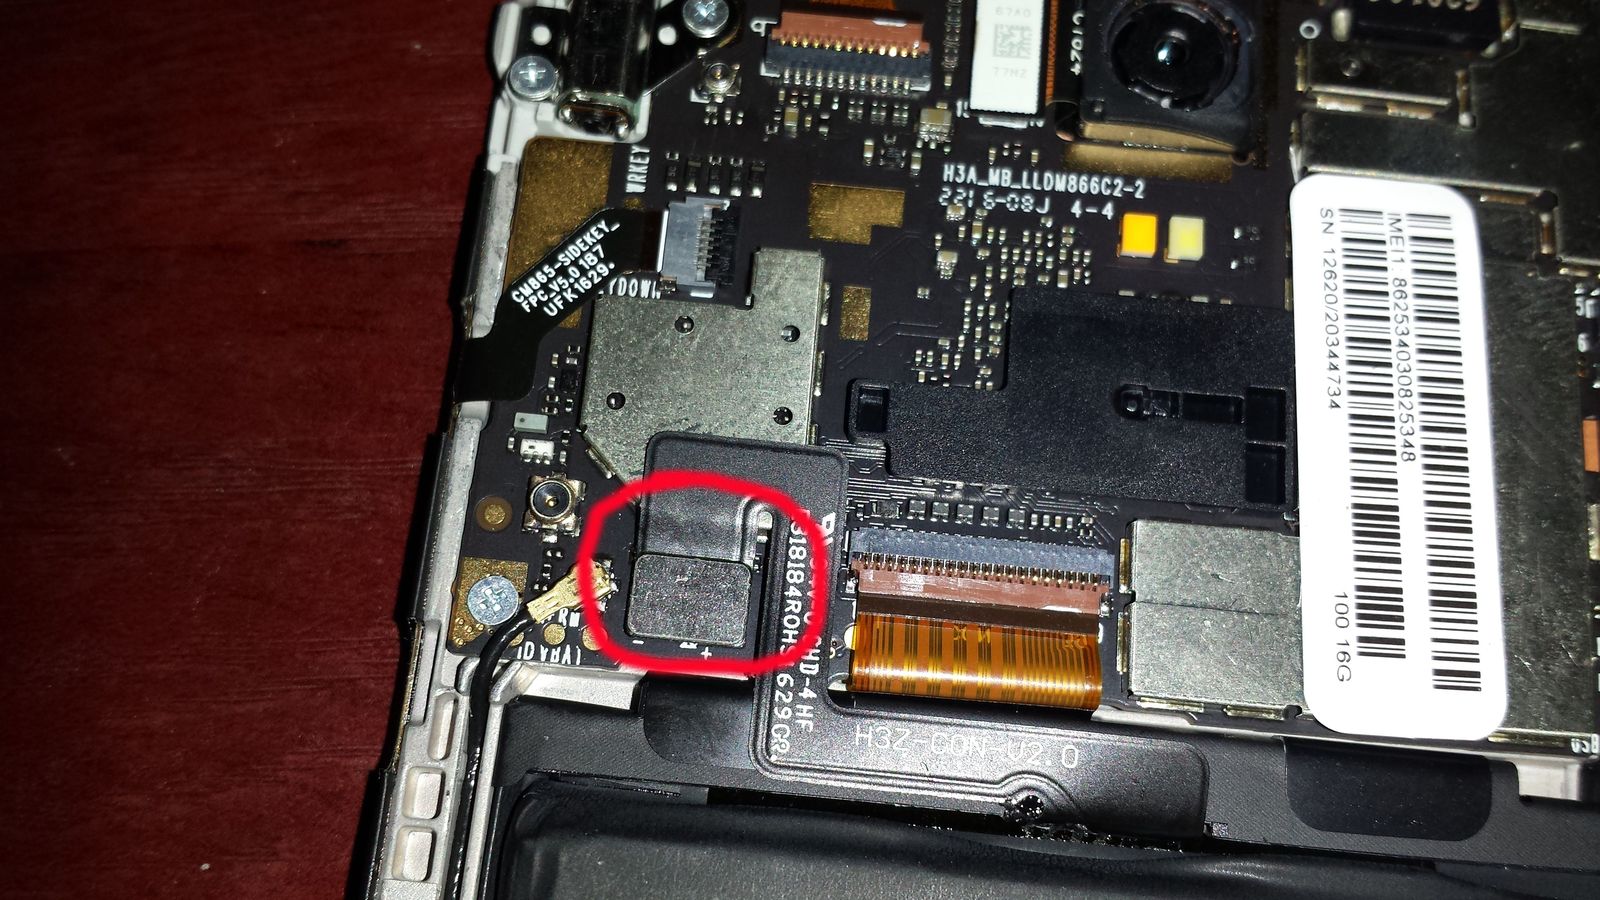 Xiaomi Mi Notebook Не Заряжается